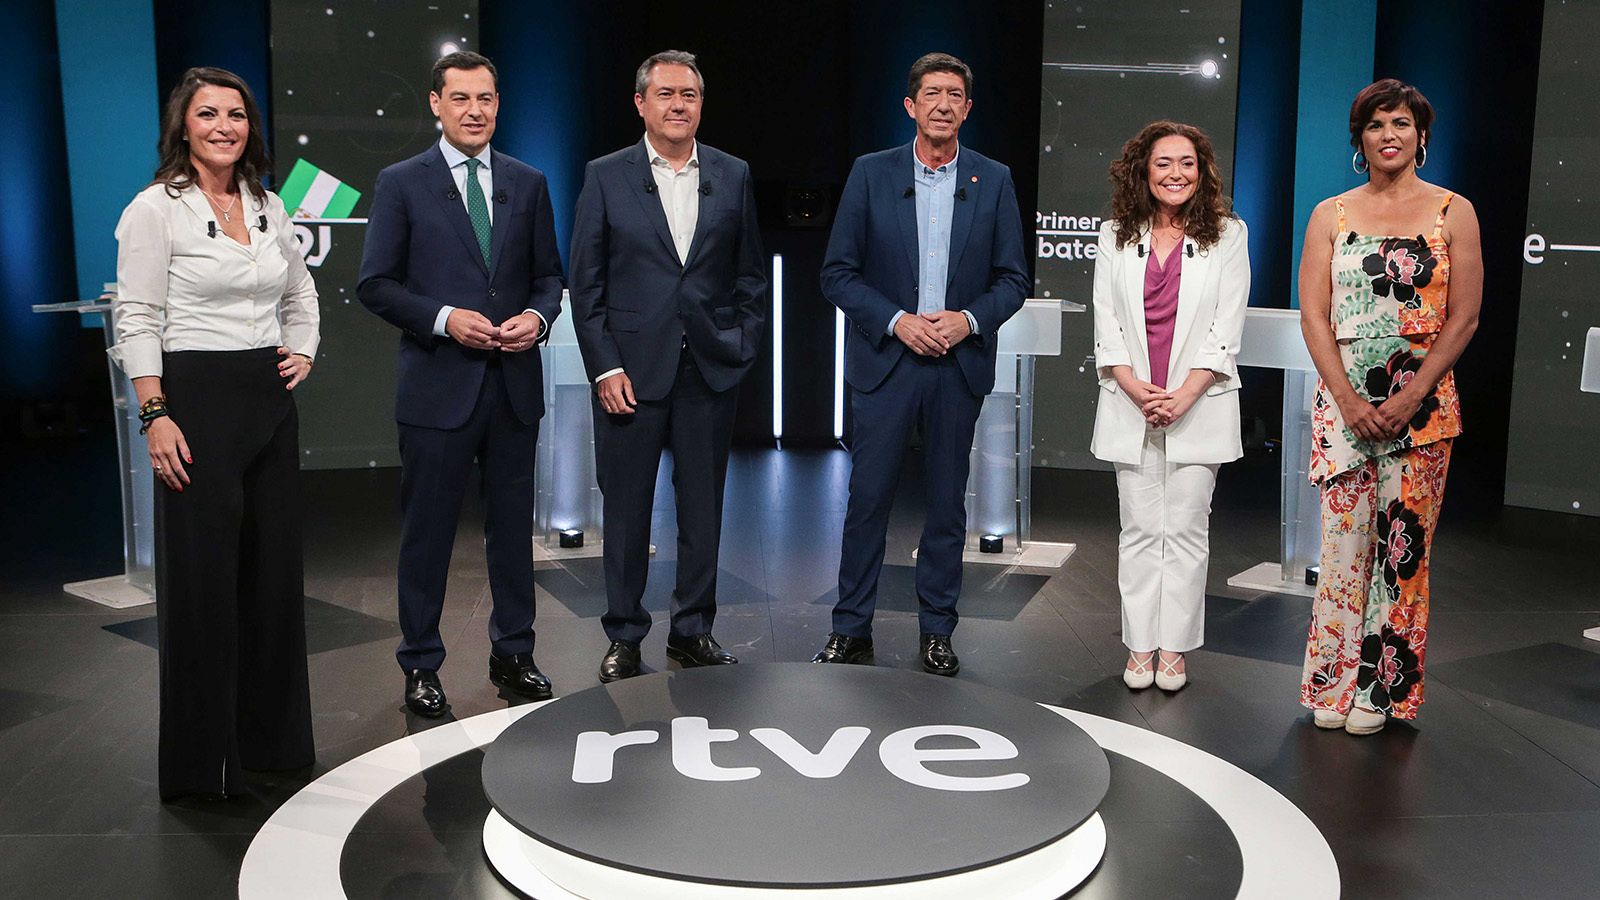 Primer debate electoral Andalucía rn RTVE